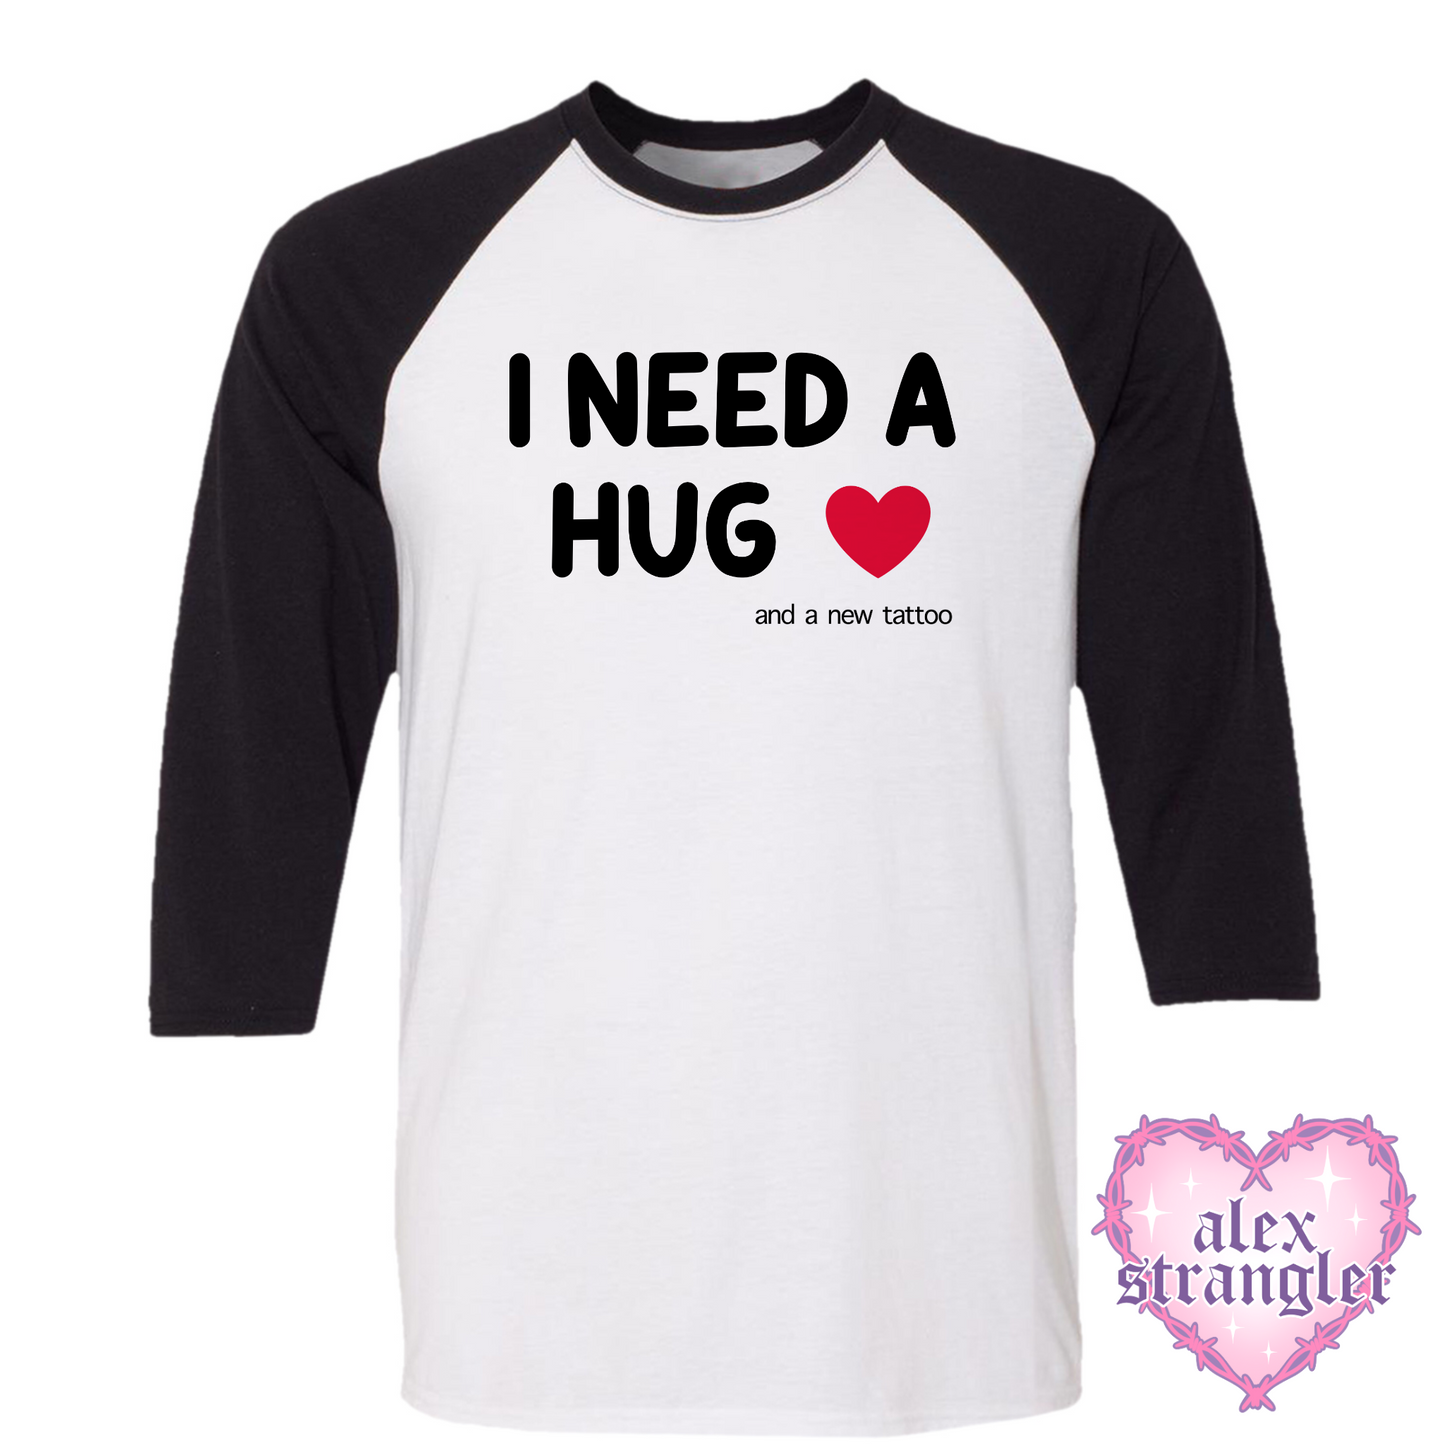 I Need a Hug....and a new tattoo - Men's/Unisex Raglan